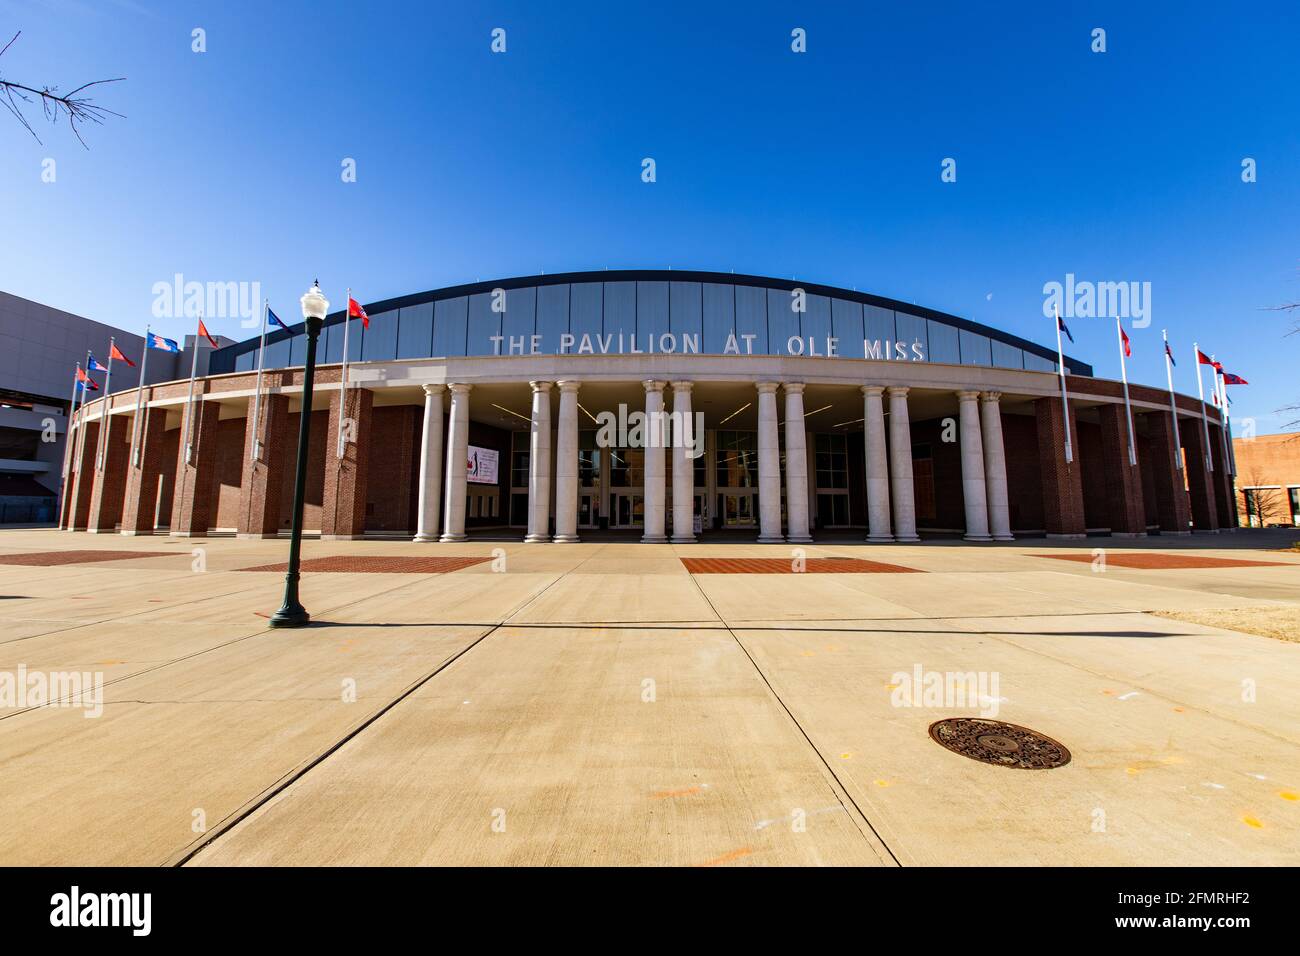 Oxford, MS - 3. Februar 2021: Der Pavillon bei Ole Miss auf dem Campus der University of Mississippi. Stockfoto